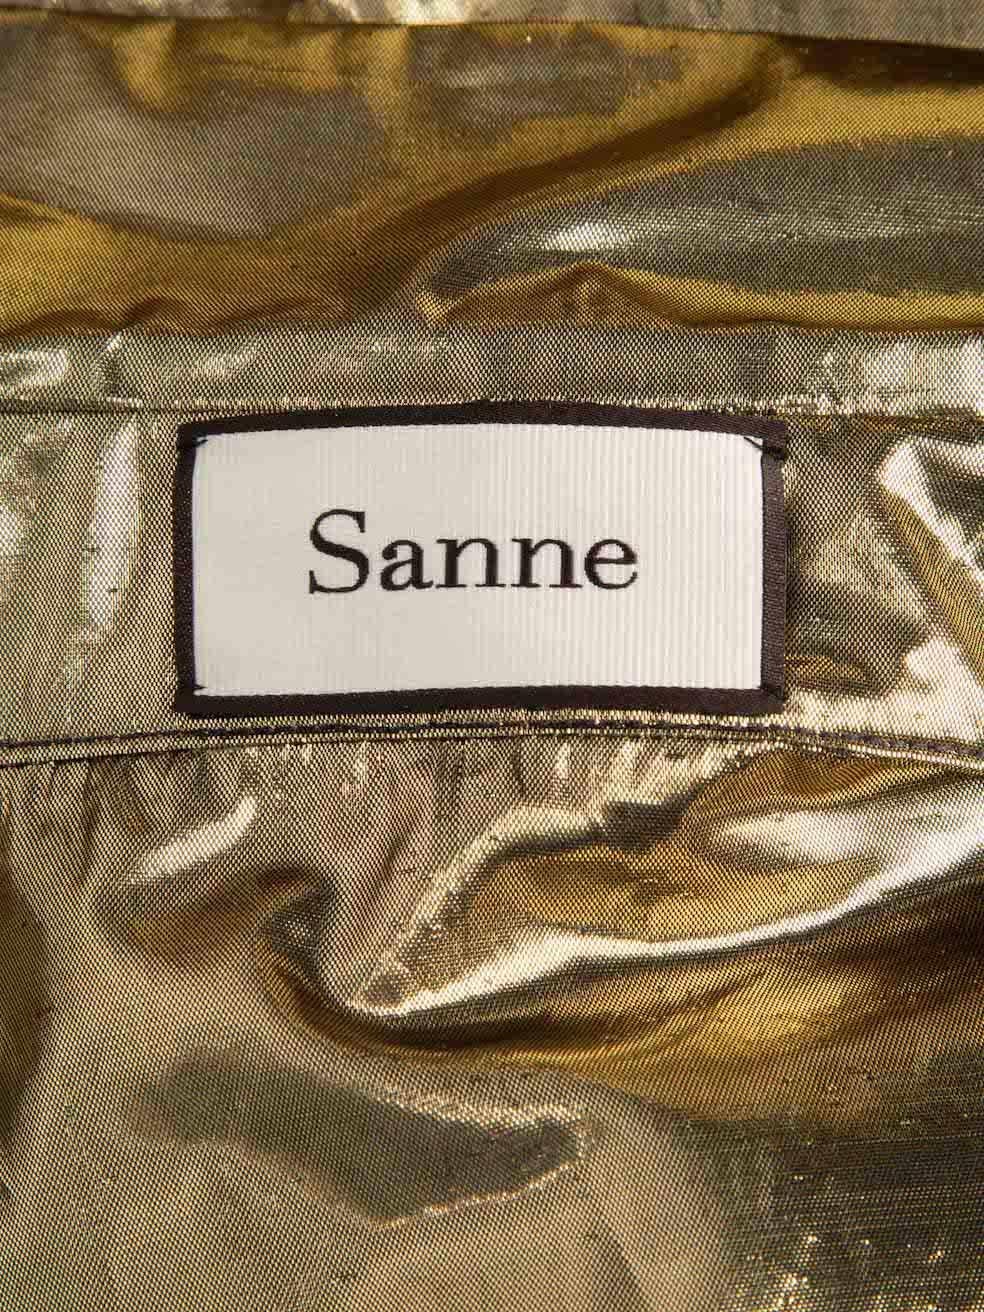 Sanne Women's Gold Geometric Accent Shirt For Sale 1